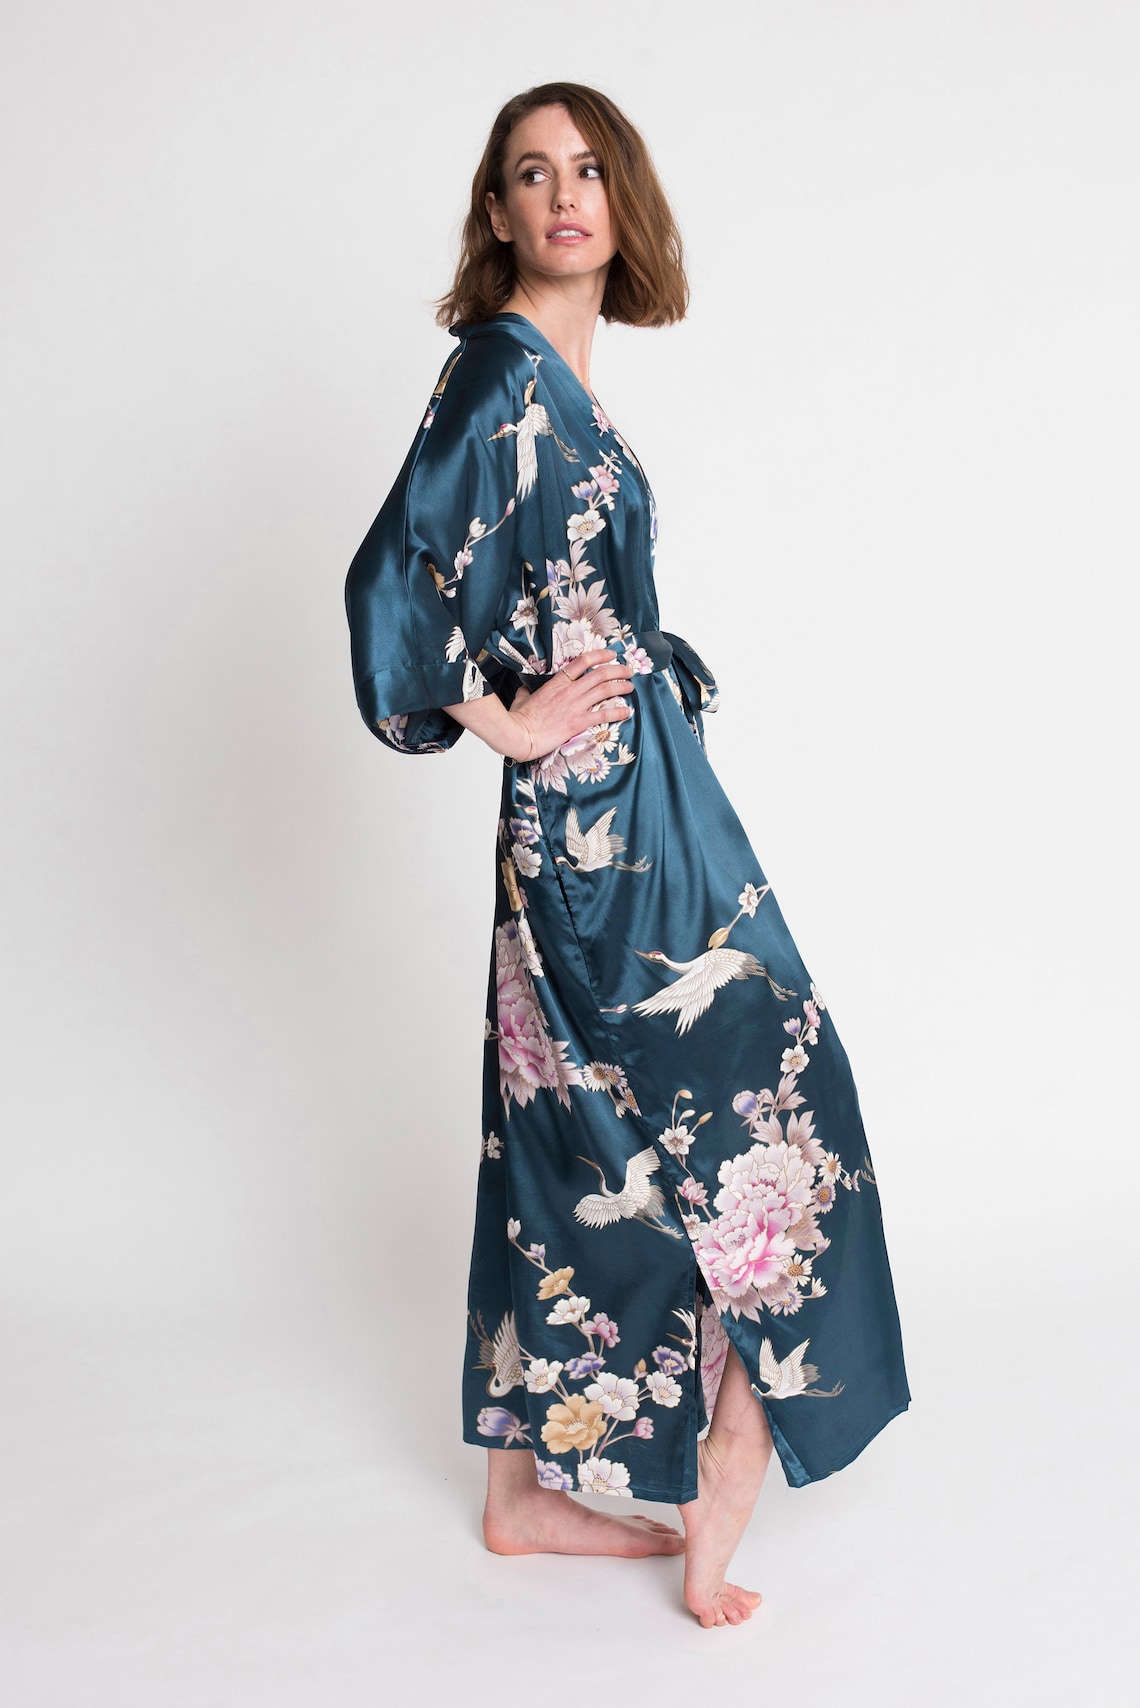 Kimono Robe Long in Chrysanthemum & Crane KIMONO Collection | Etsy